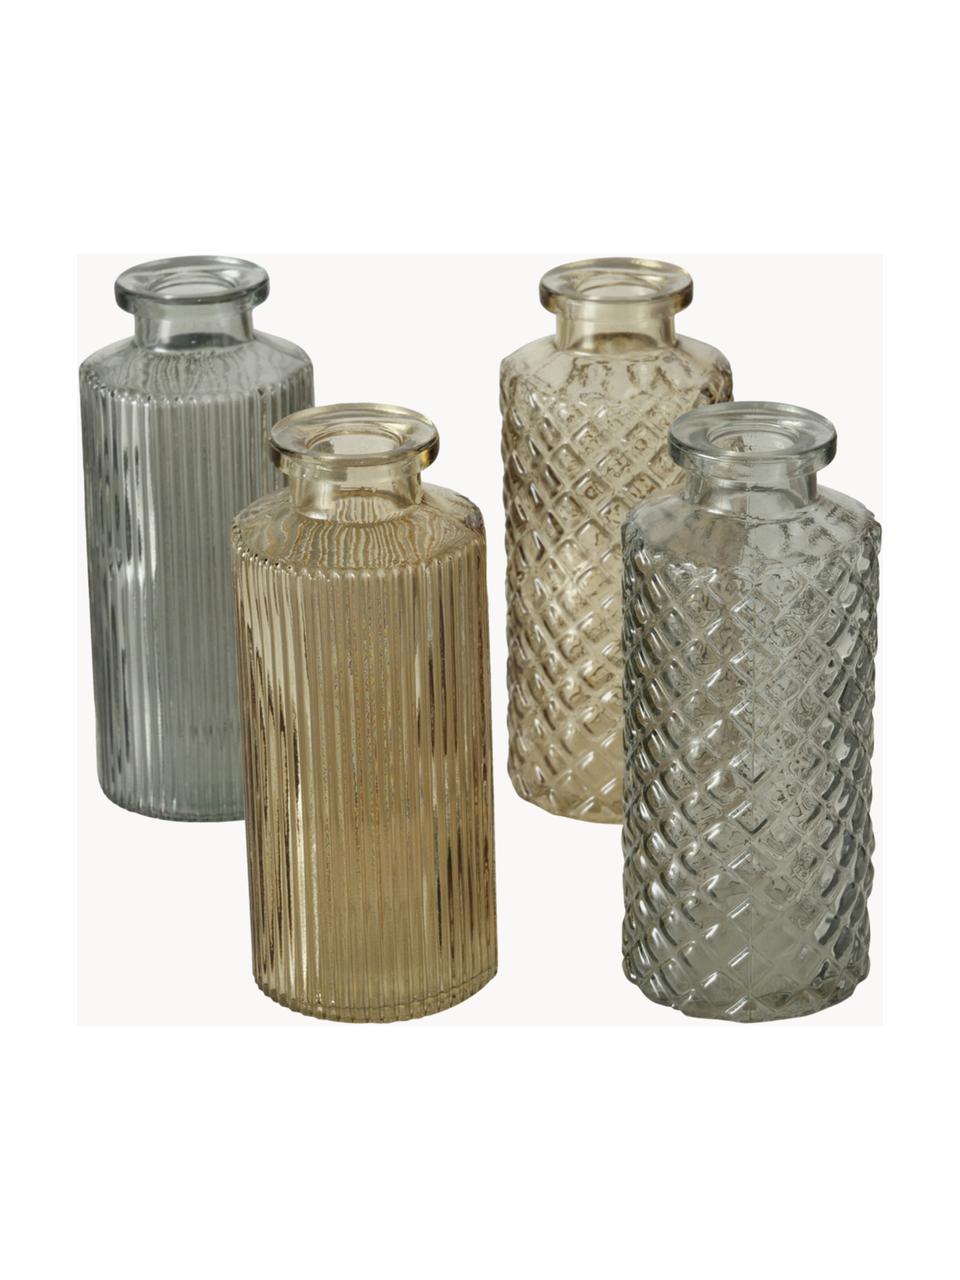 Set de jarrones de vidrio Panja, 4 uds., Vidrio, Tonos beige y grises, Ø 6 x Al 14 cm